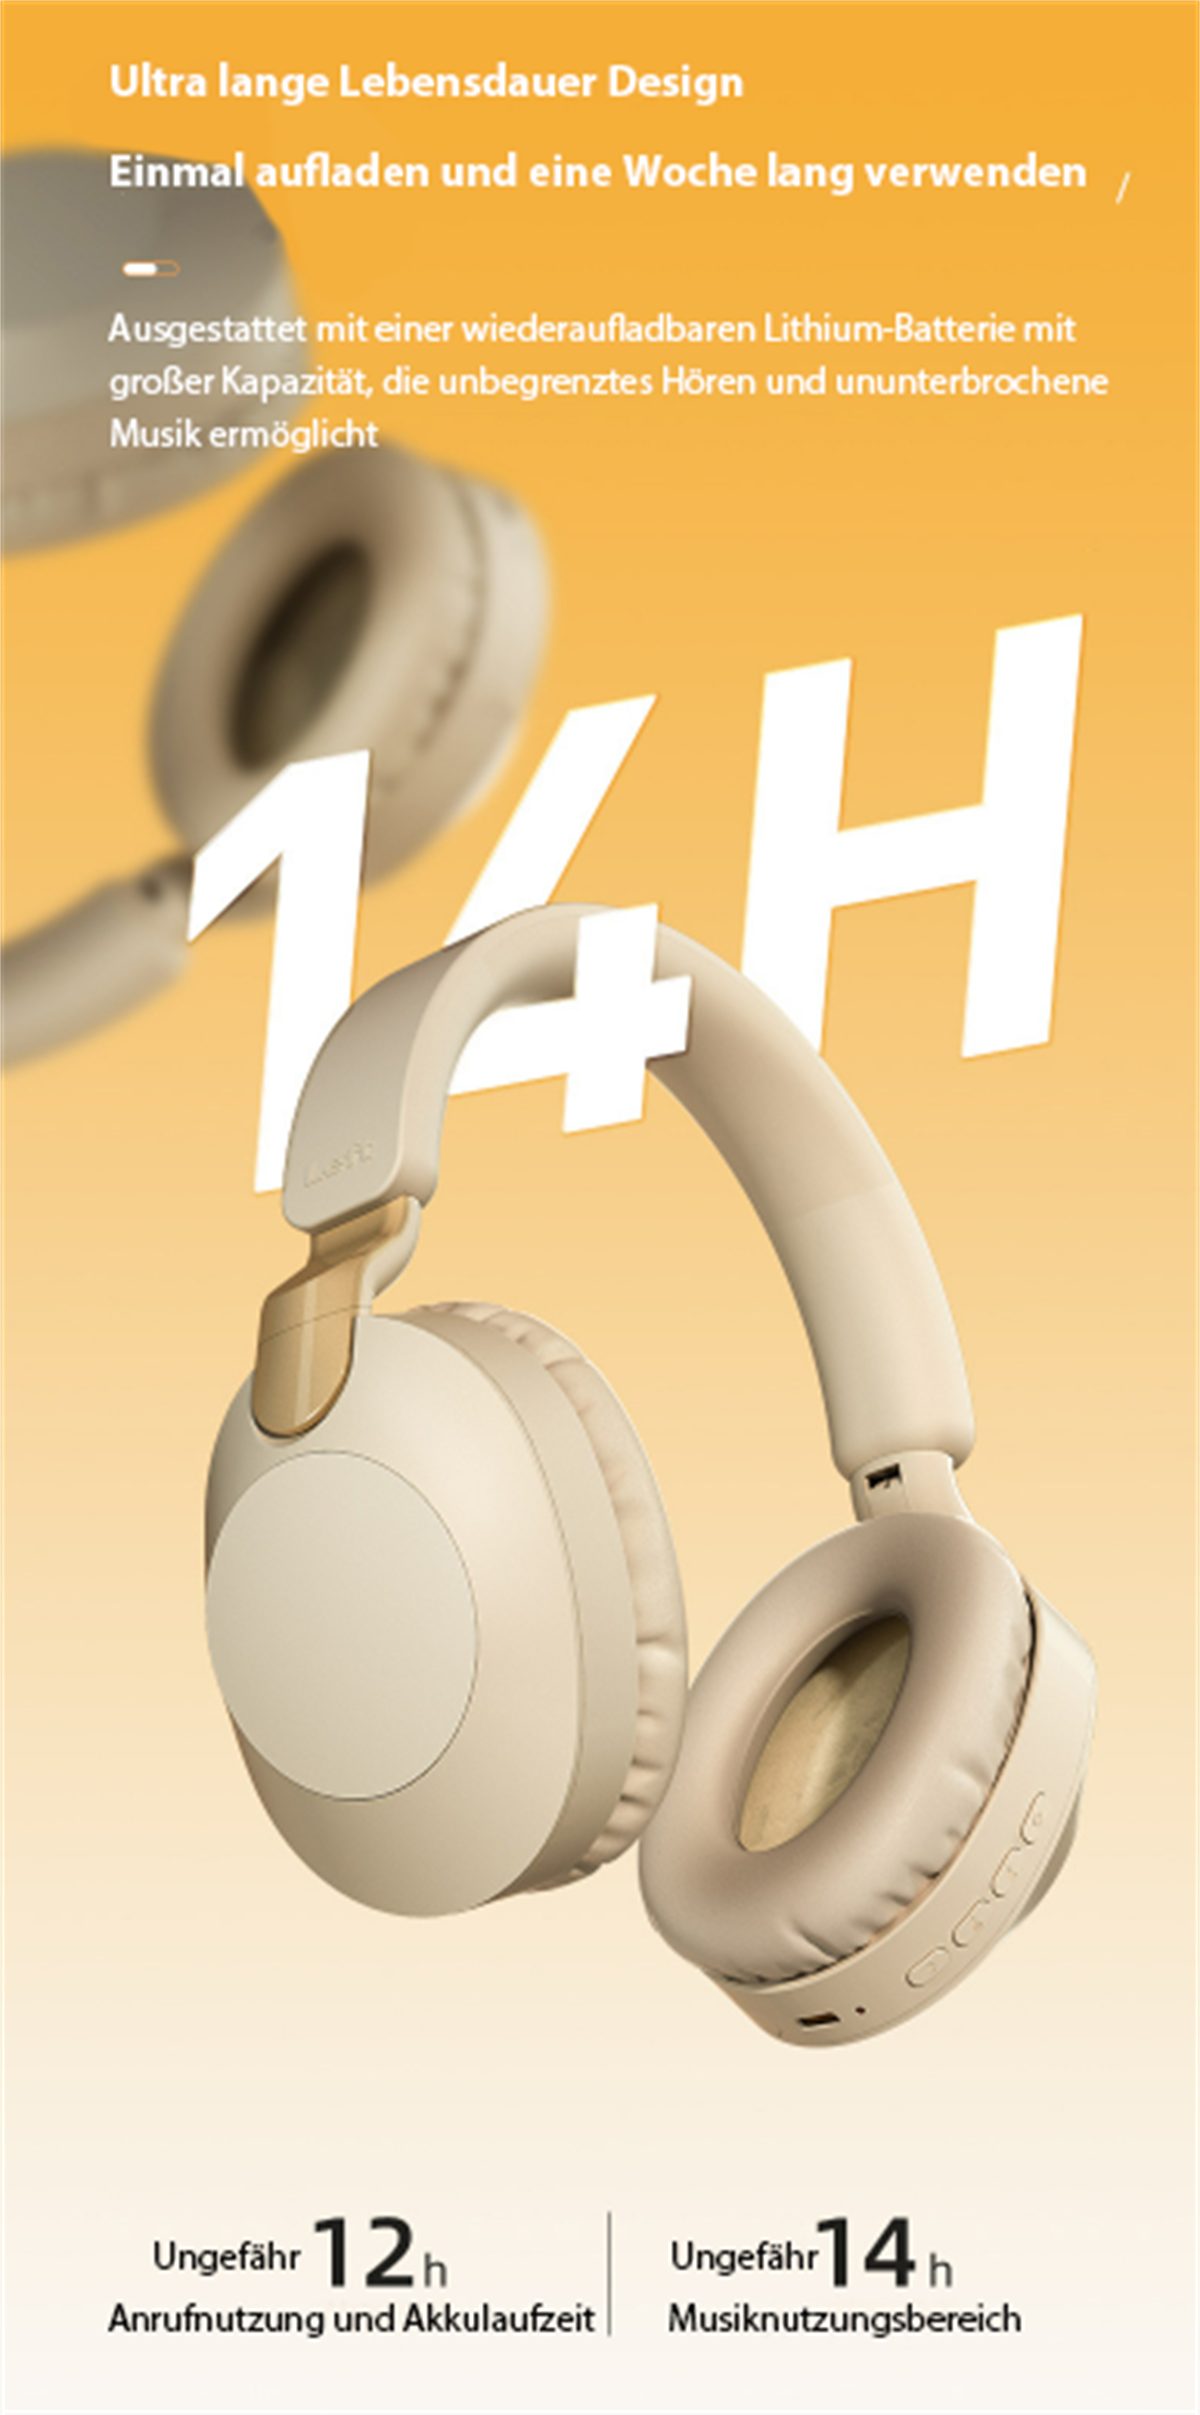 befestigtes Akkulaufzeit Kopf langer mit Schwarz Bluetooth-Gaming-Headset selected carefully Am Over-Ear-Kopfhörer